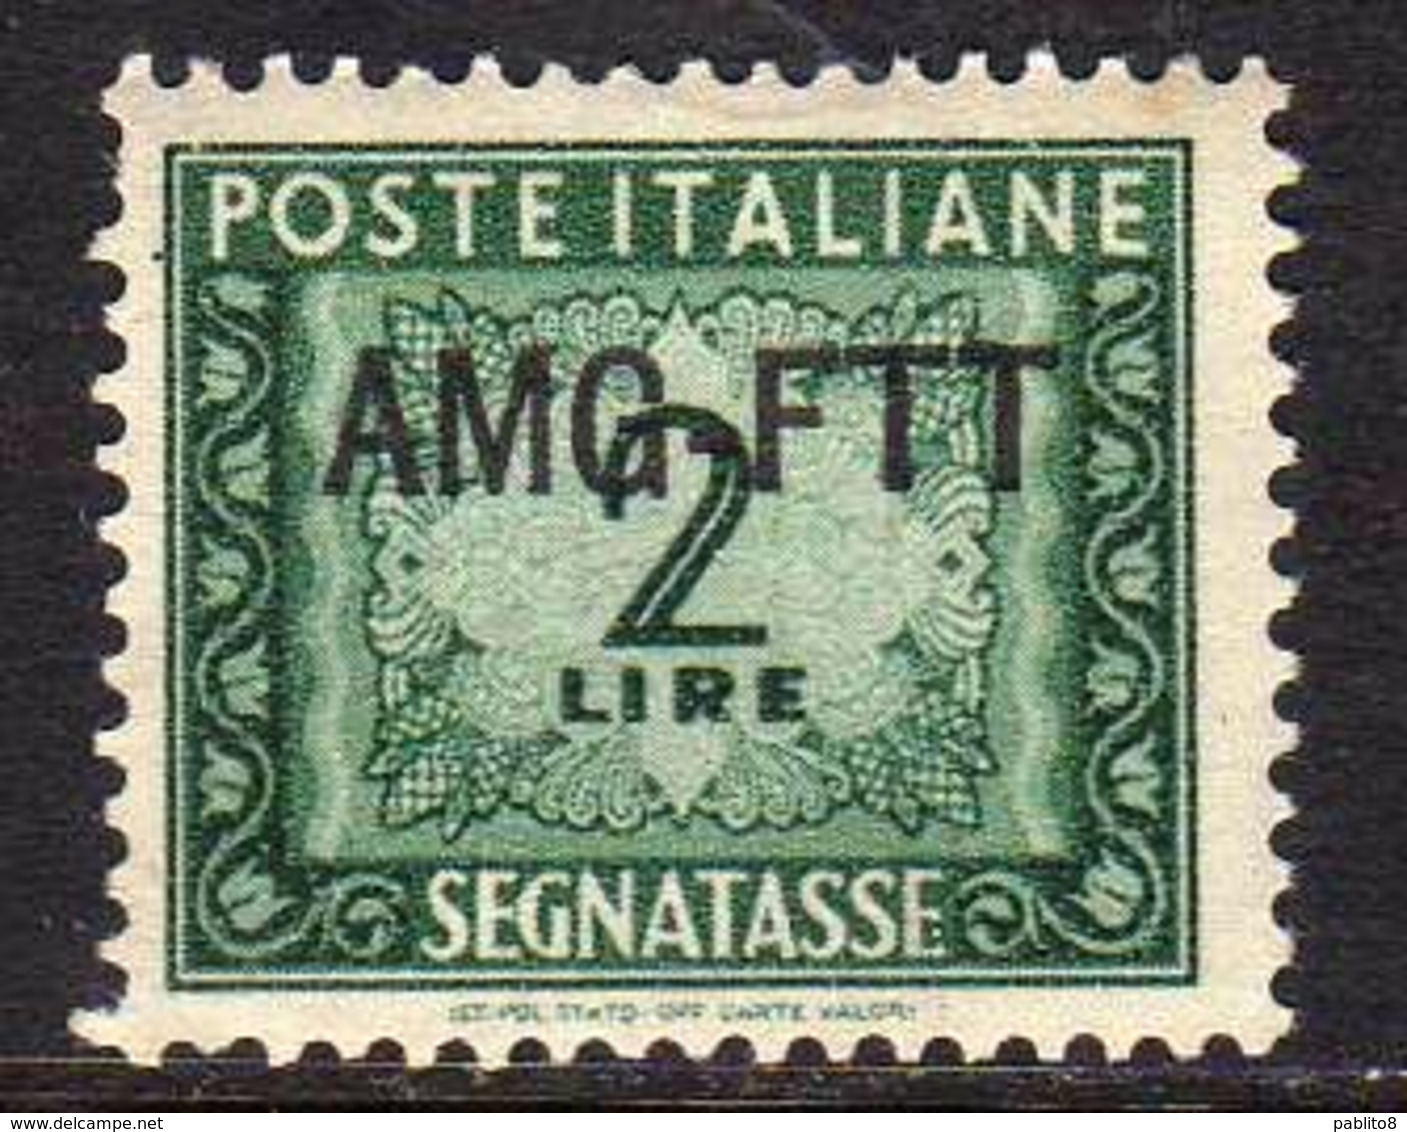 TRIESTE A 1949 1954 AMG-FTT SOPRASTAMPATO D'ITALIA ITALY OVERPRINTED SEGNATASSE POSTAGE DUE TAXES TASSE LIRE 2 MNH - Postage Due